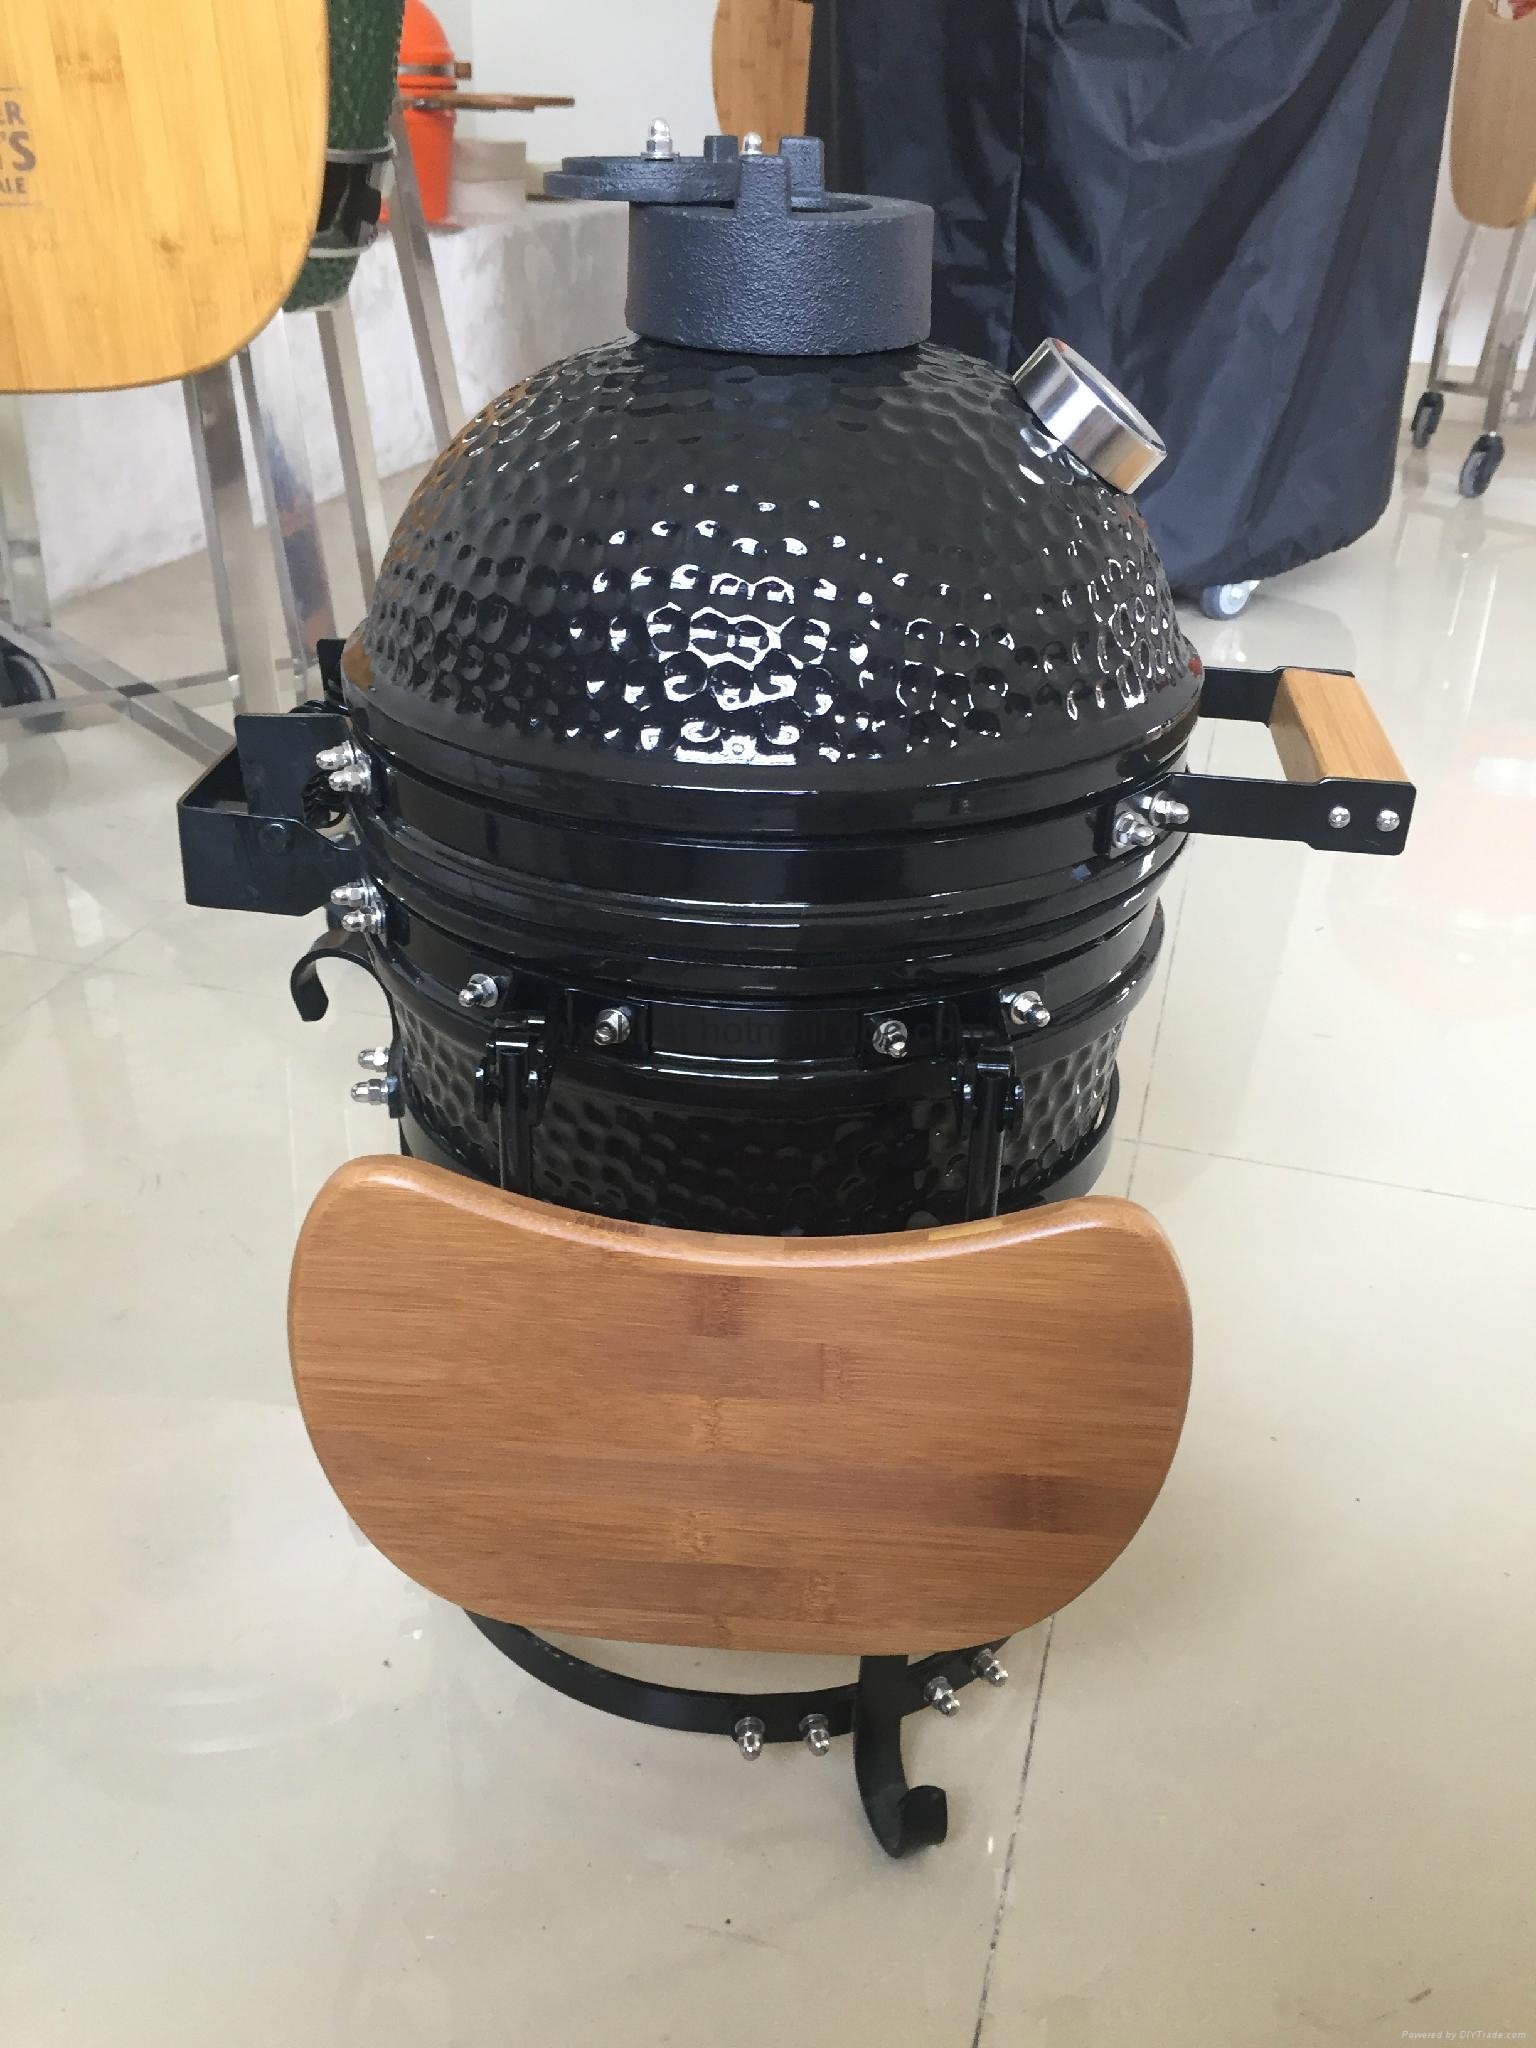 MINI kamado barbecue grill outdoor cooking garden kitchenware 5